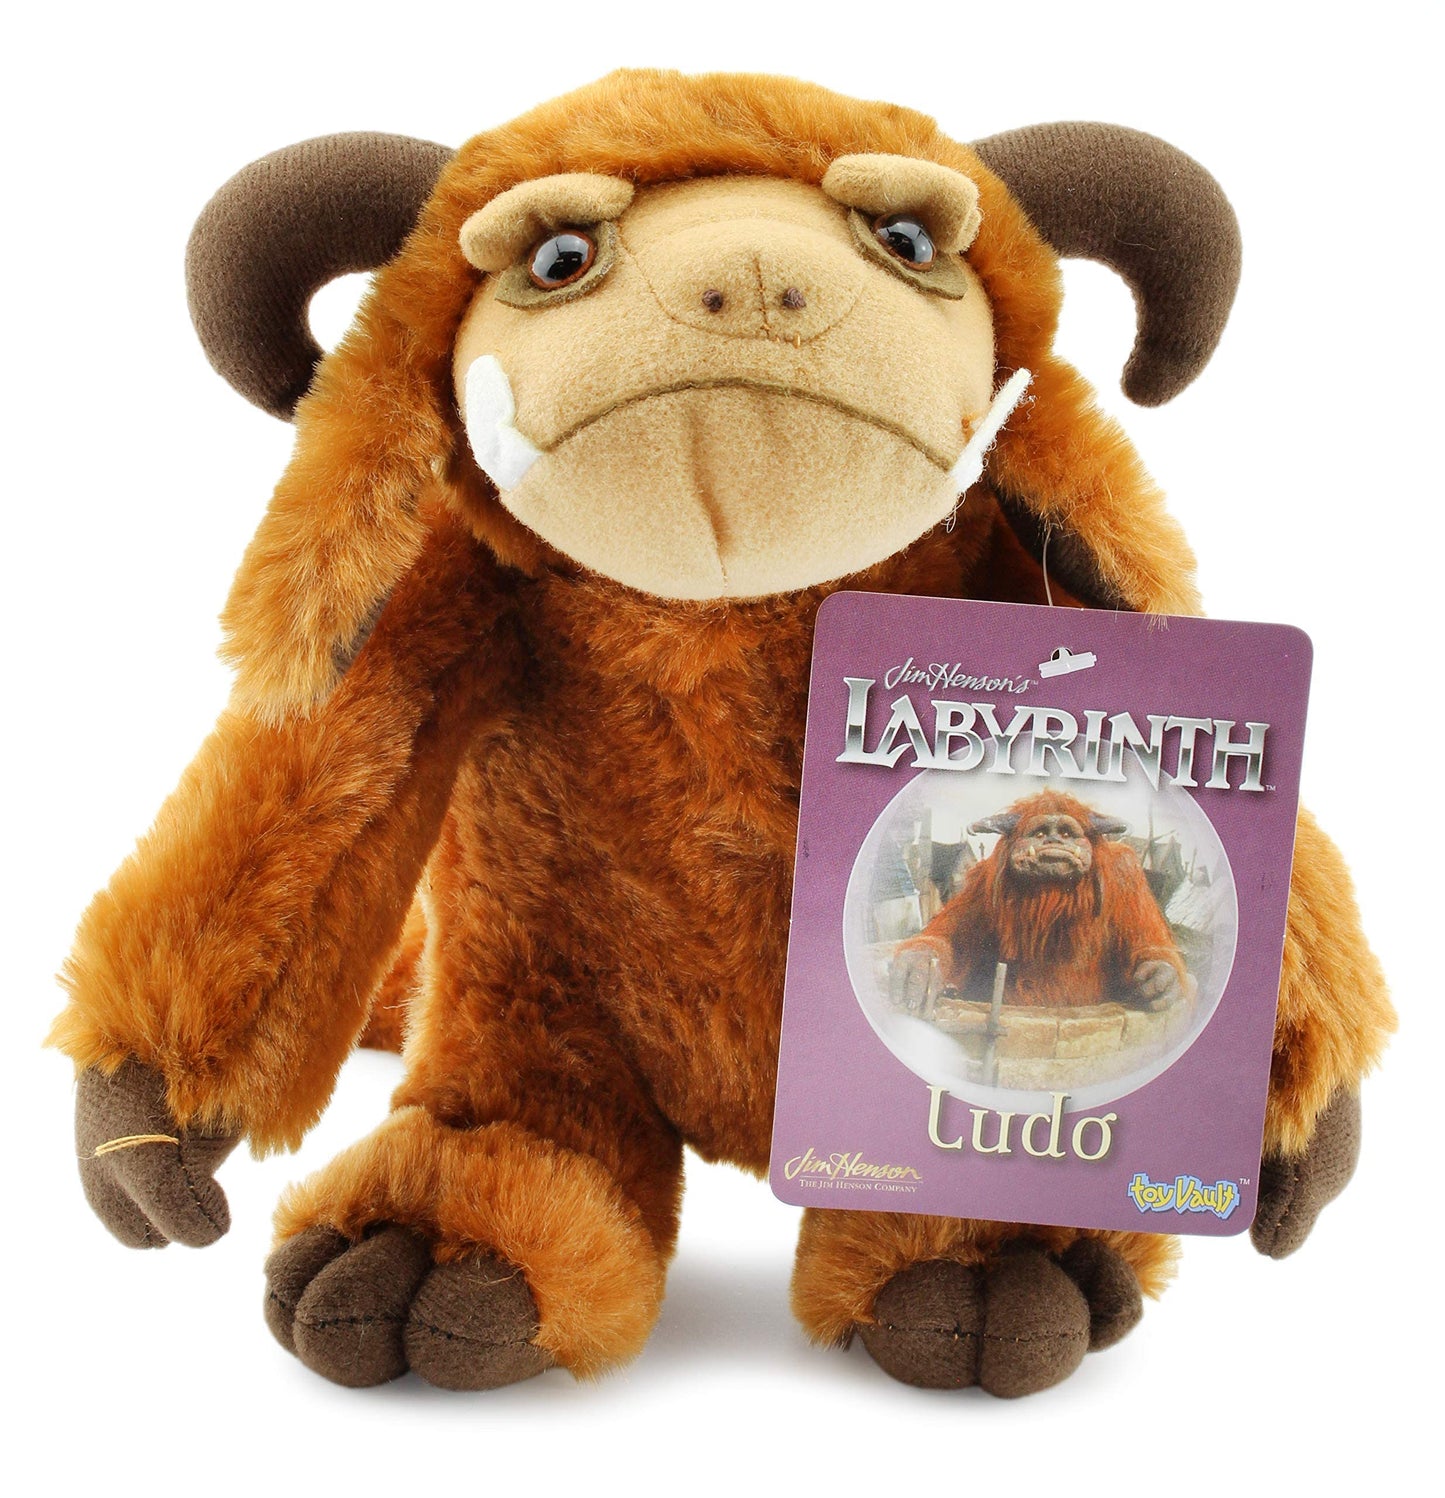 Toy Vault Labyrinth Ludo Plush, Stuffed Figure from Jim Henson's Labyrinth Movie